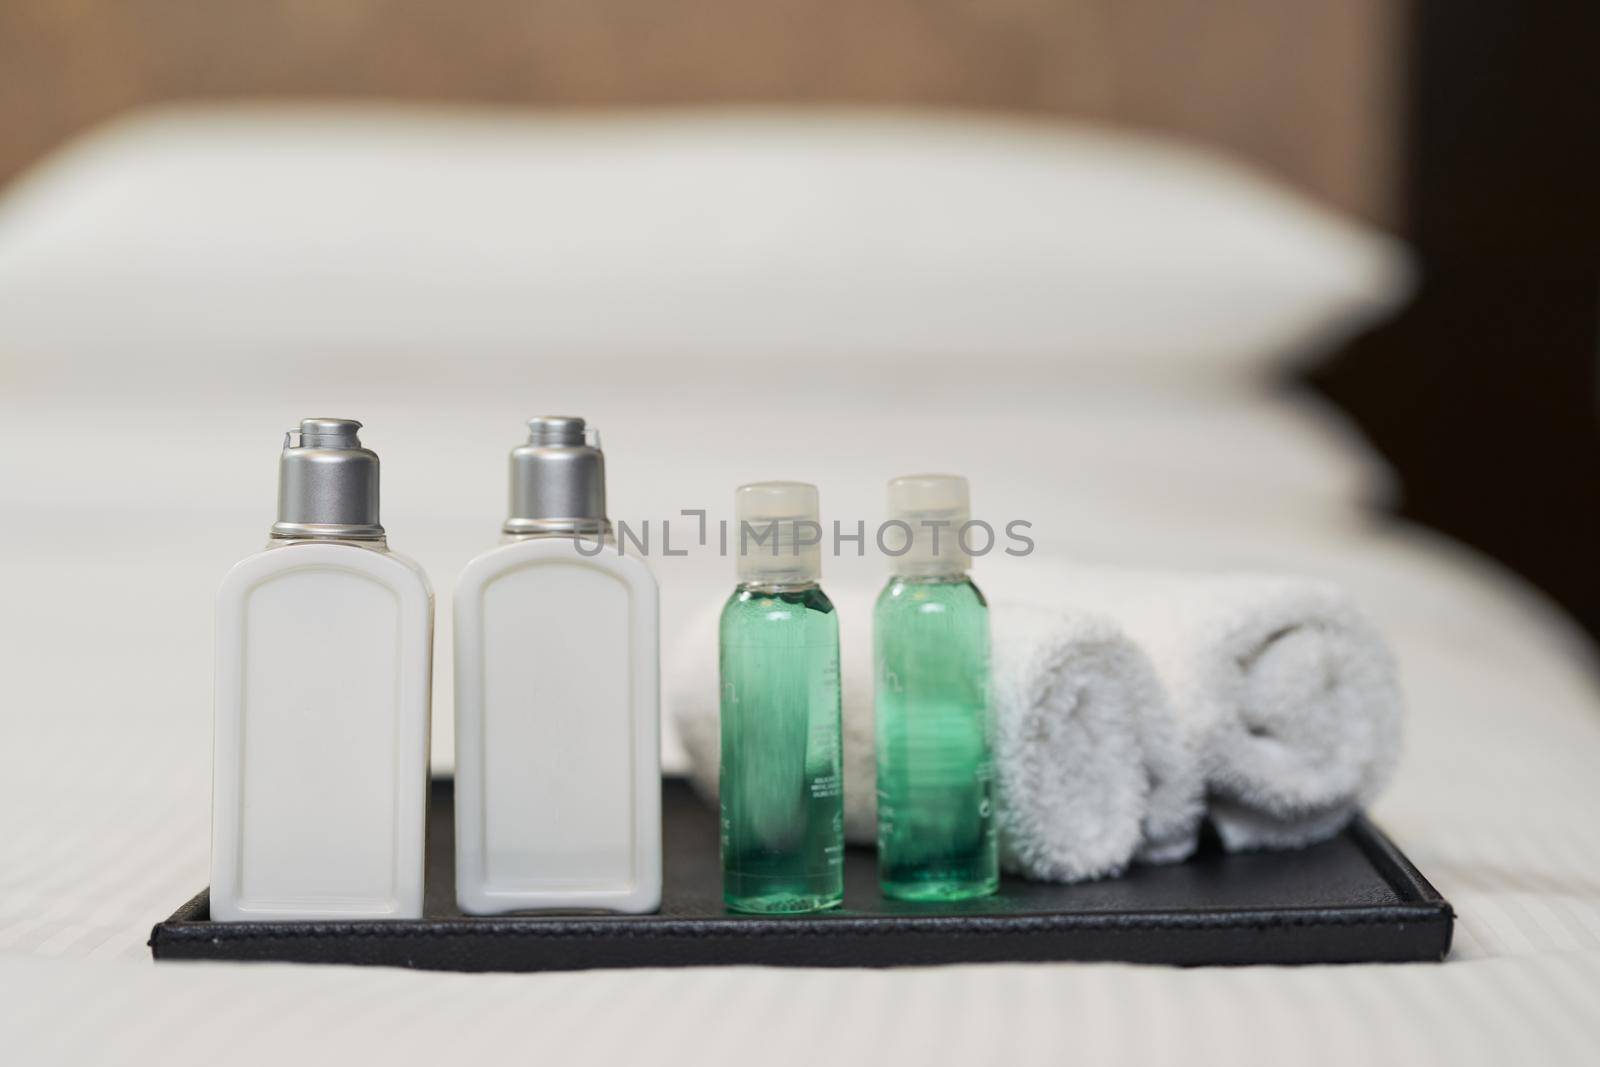 Hotel amenities set on blanket in bedroom by friendsstock